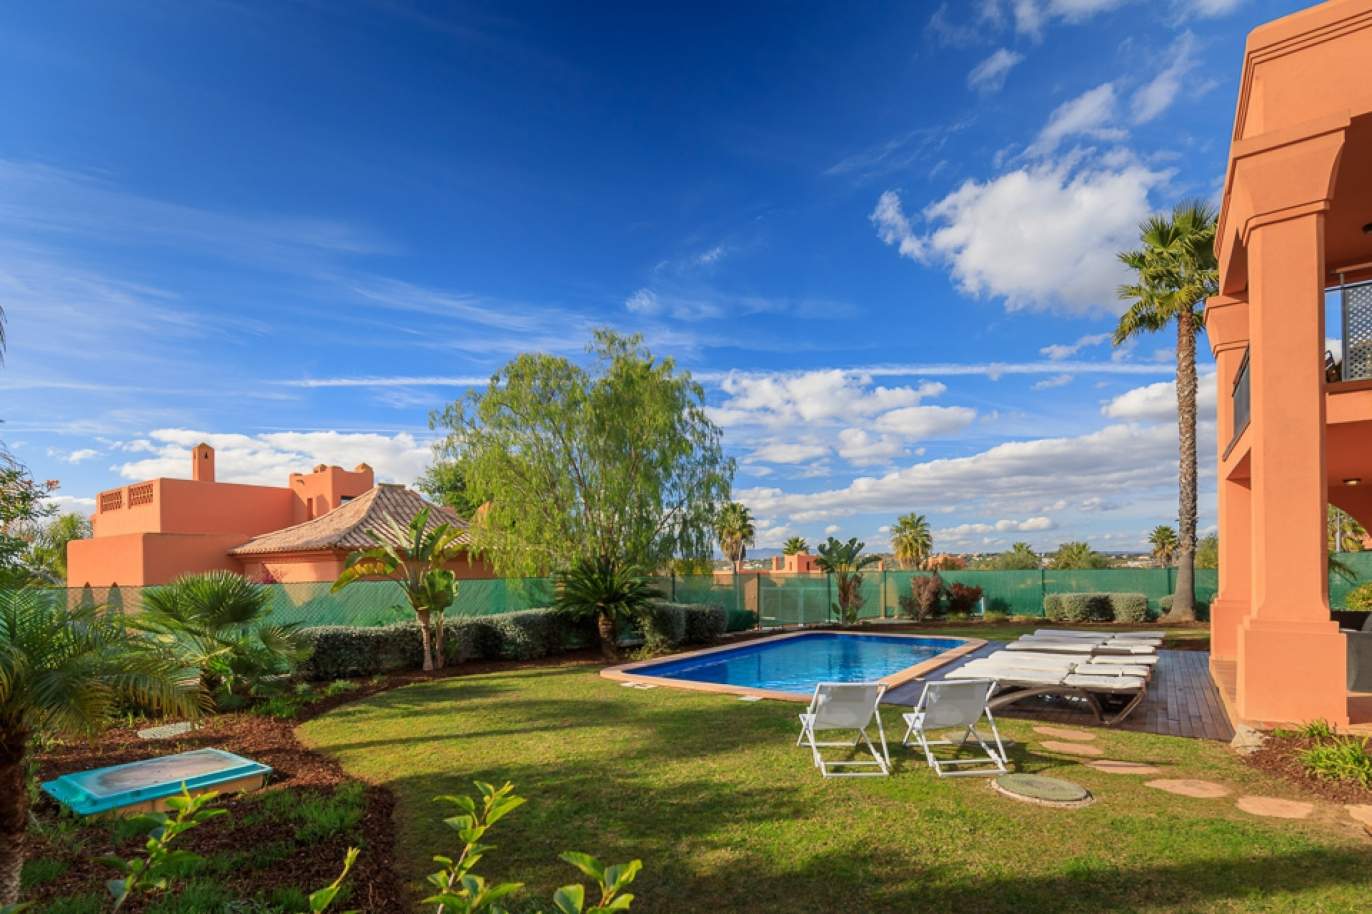 Villa for sale, with terrace, Silves, Algarve, Portugal_141419